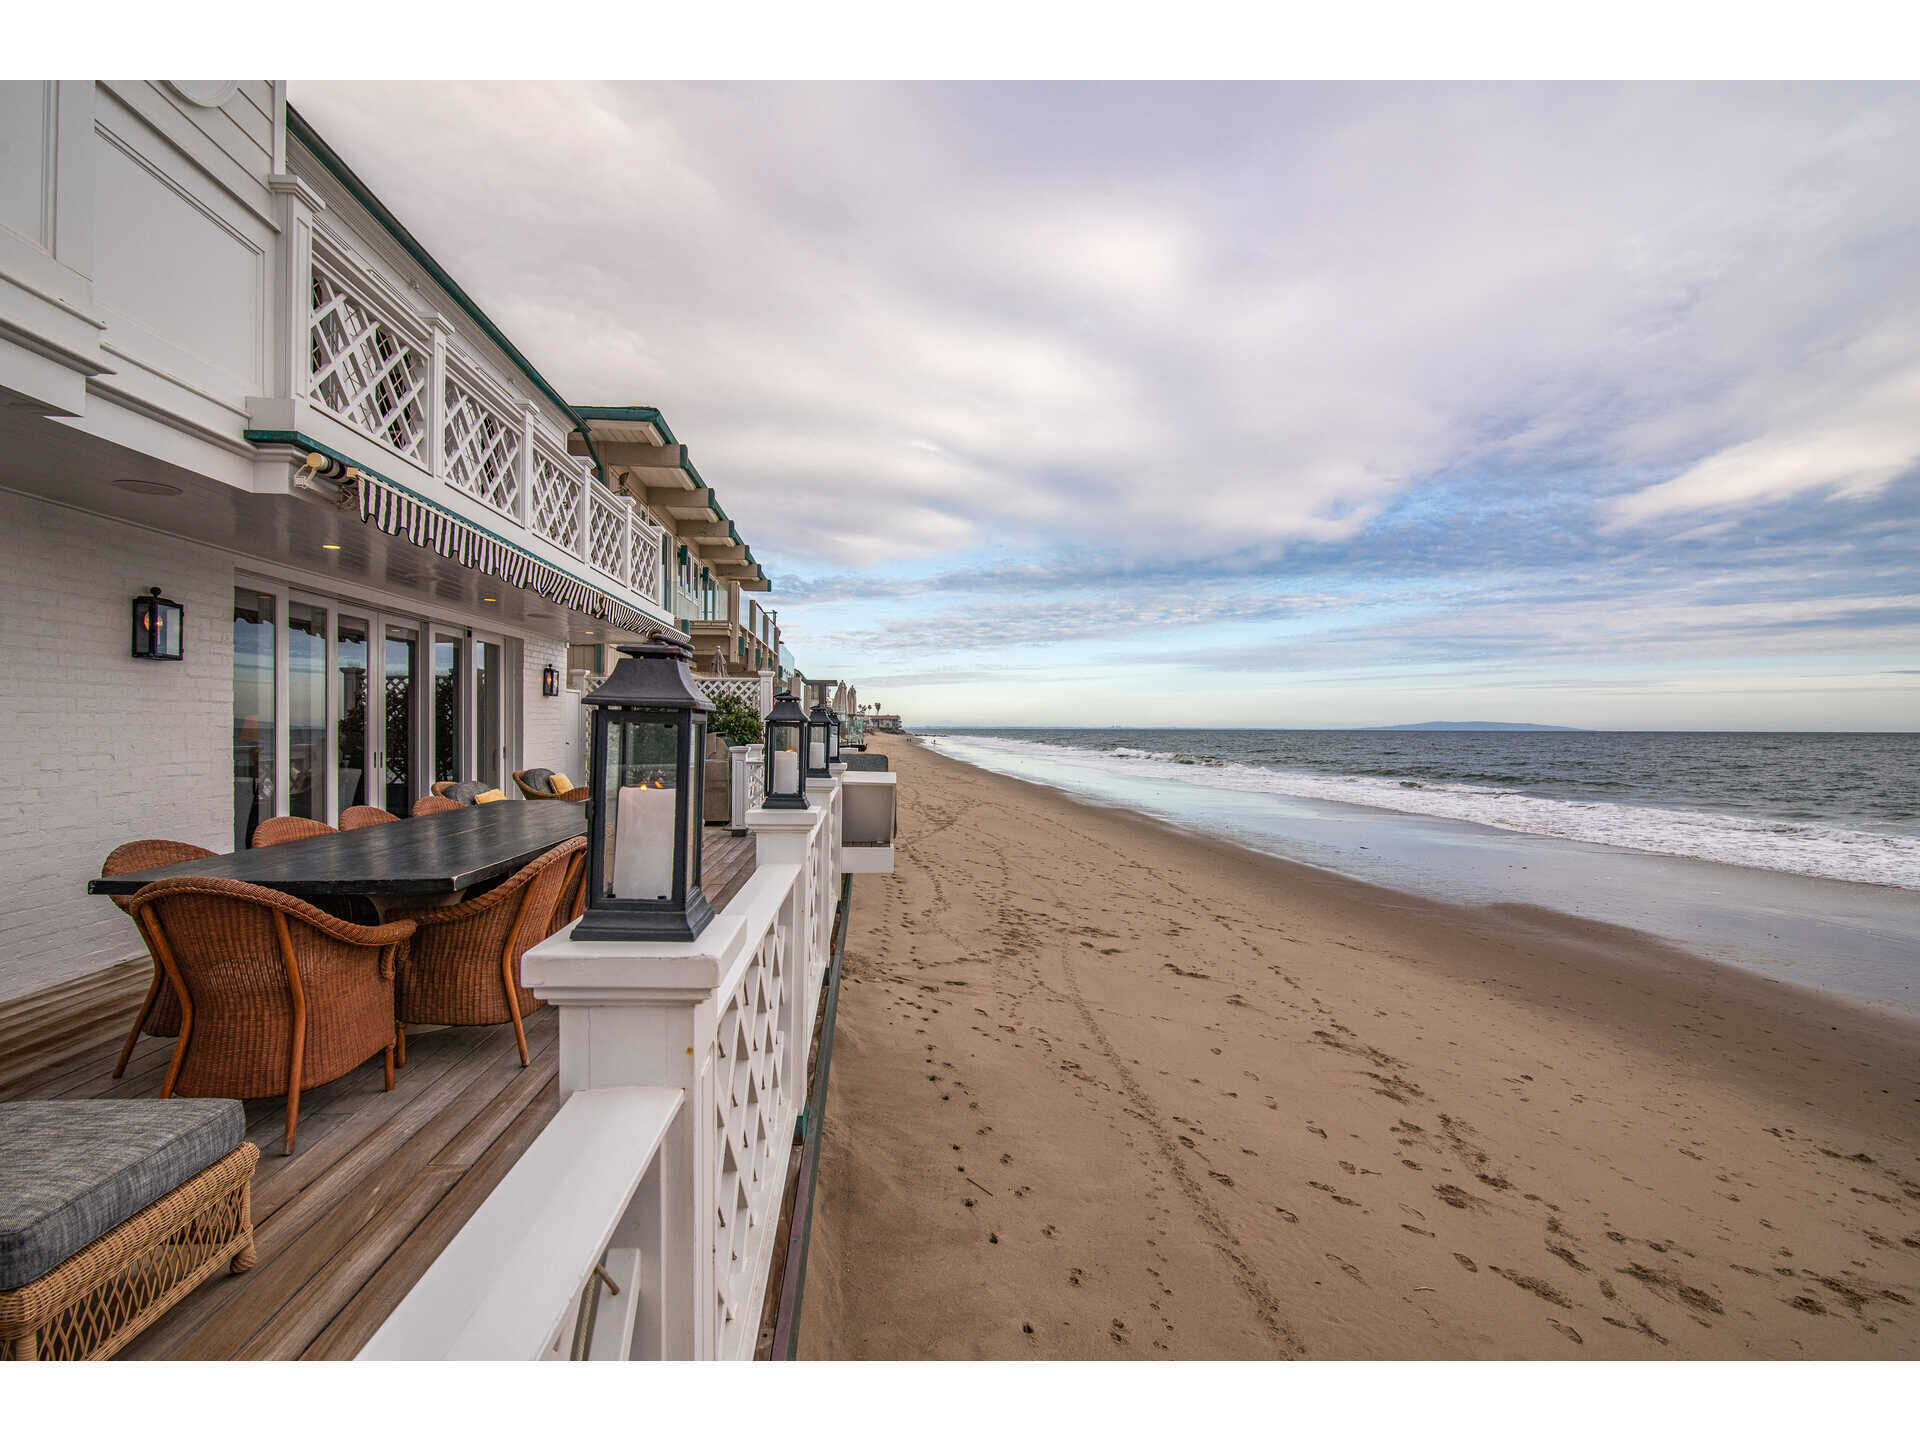 Francis York A Resort Developer’s Oceanfront Malibu Mansion6.jpg